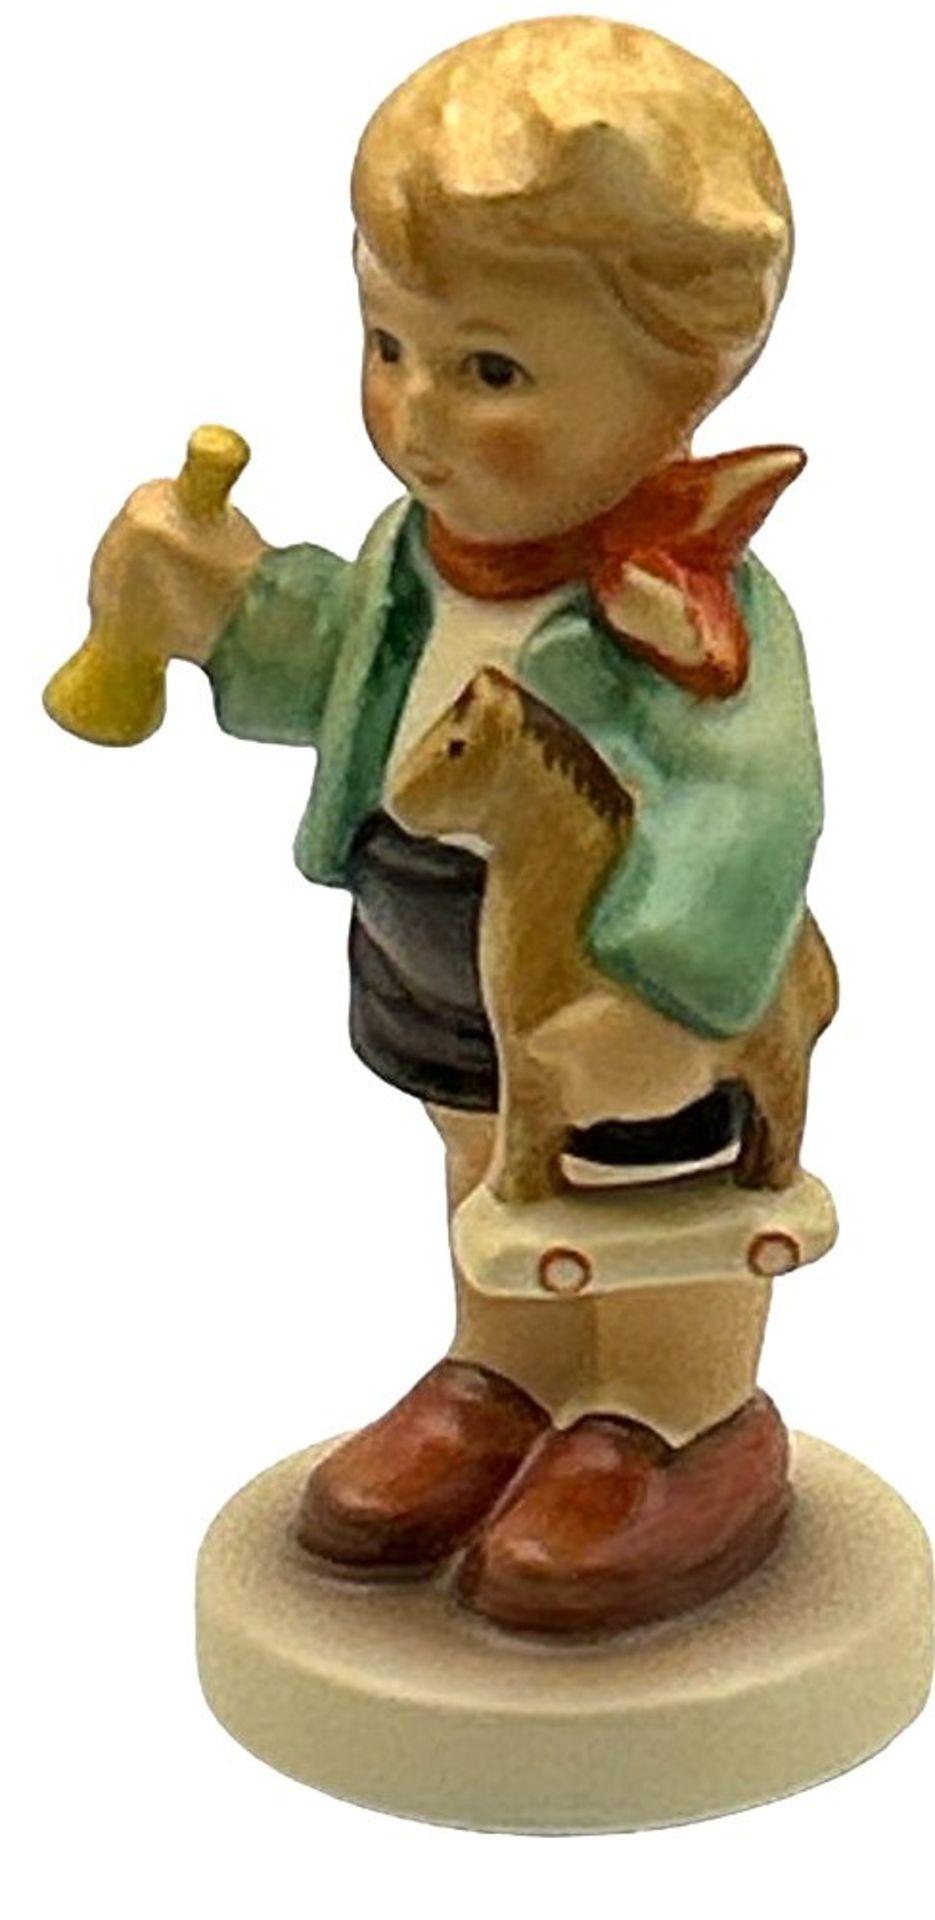 Junge mit Holzpferd "Goebel" in orig. Karton, H-8 cm - Bild 2 aus 2